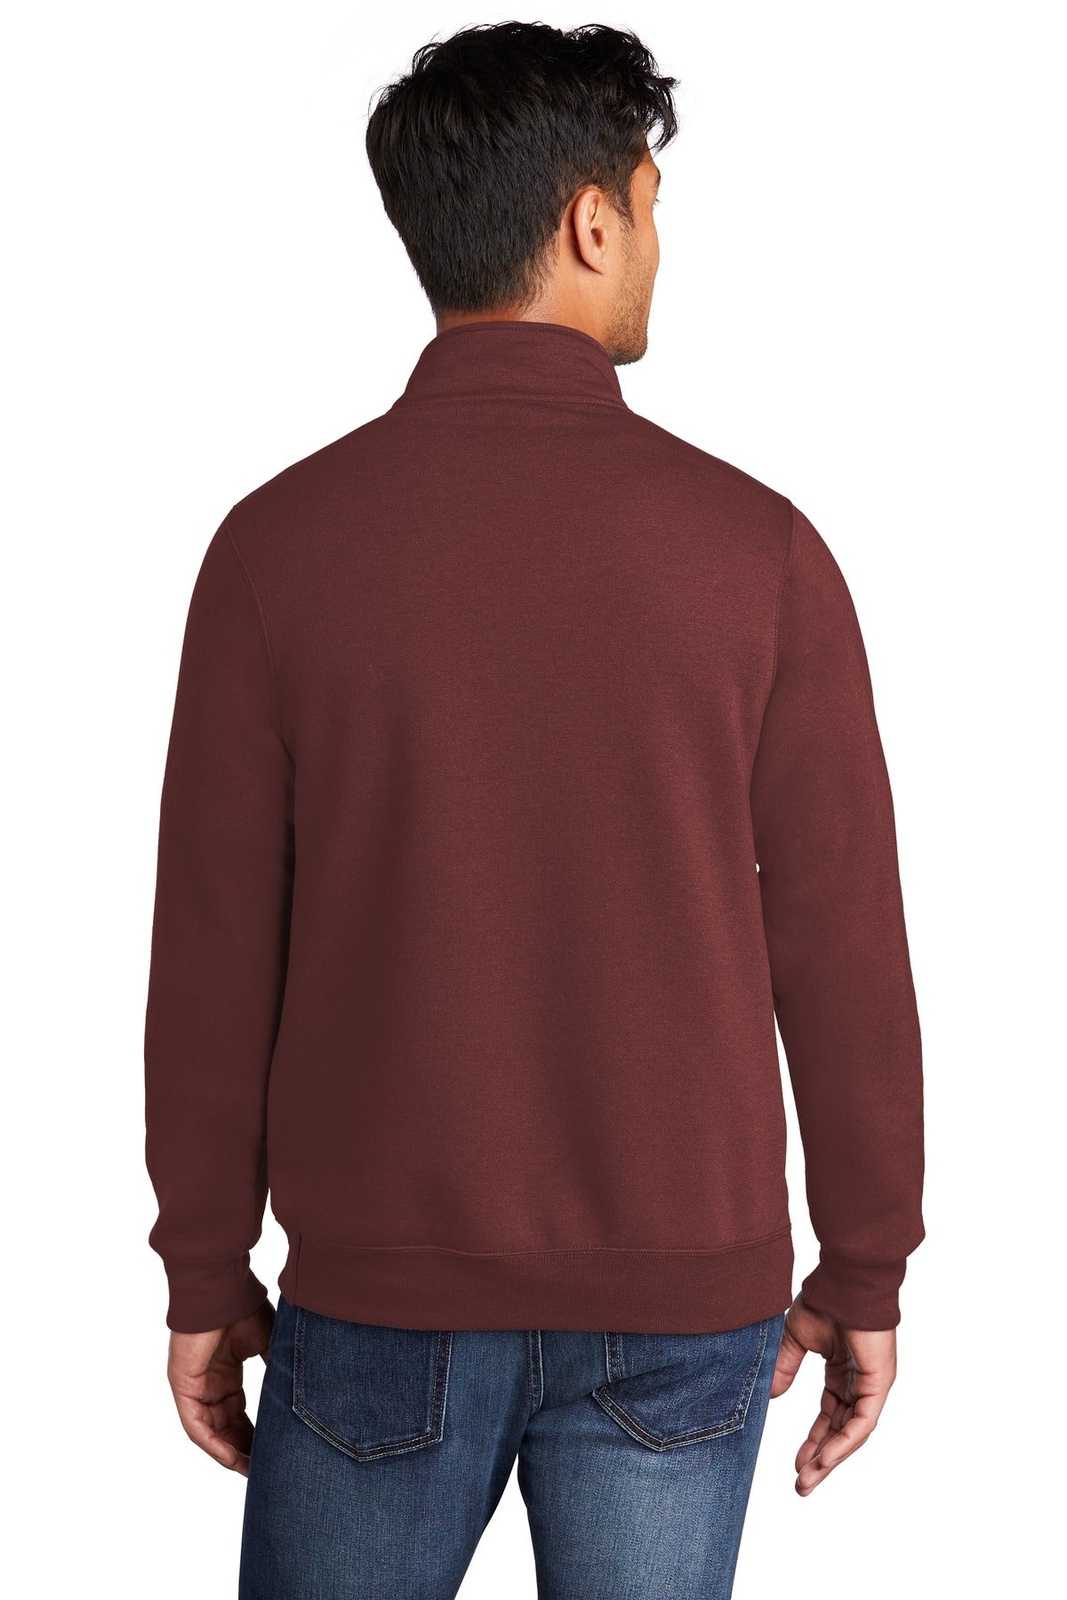 Port & Company PC78Q Core Fleece 1/4-Zip Pullover Sweatshirt - Maroon - HIT a Double - 1